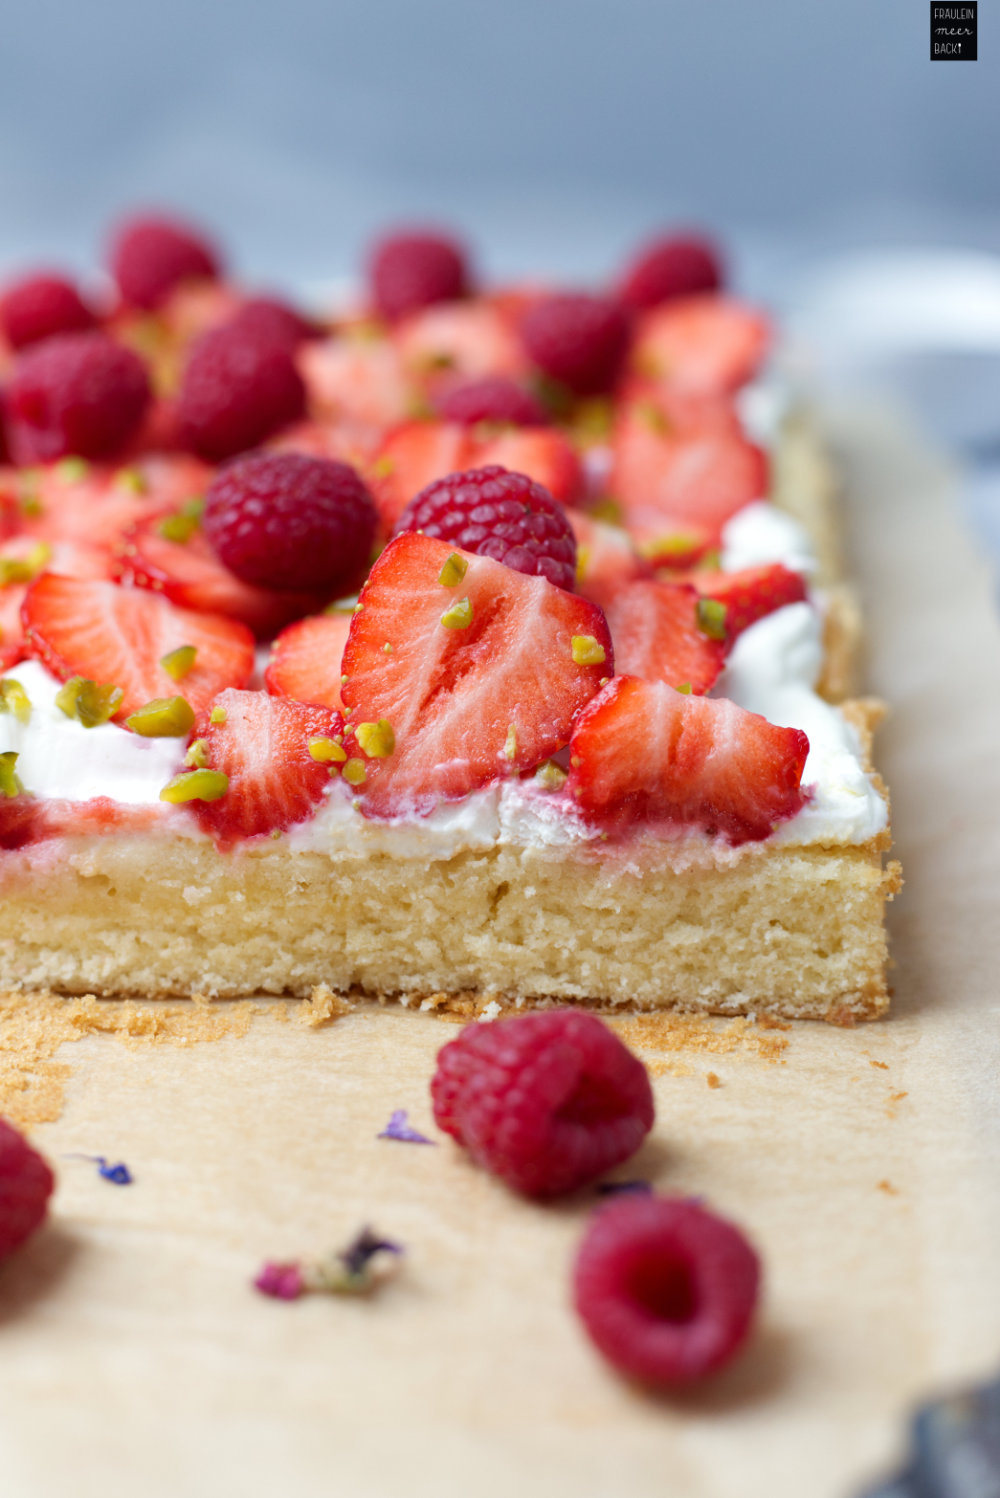 Erdbeer Blechkuchen — Rezepte Suchen